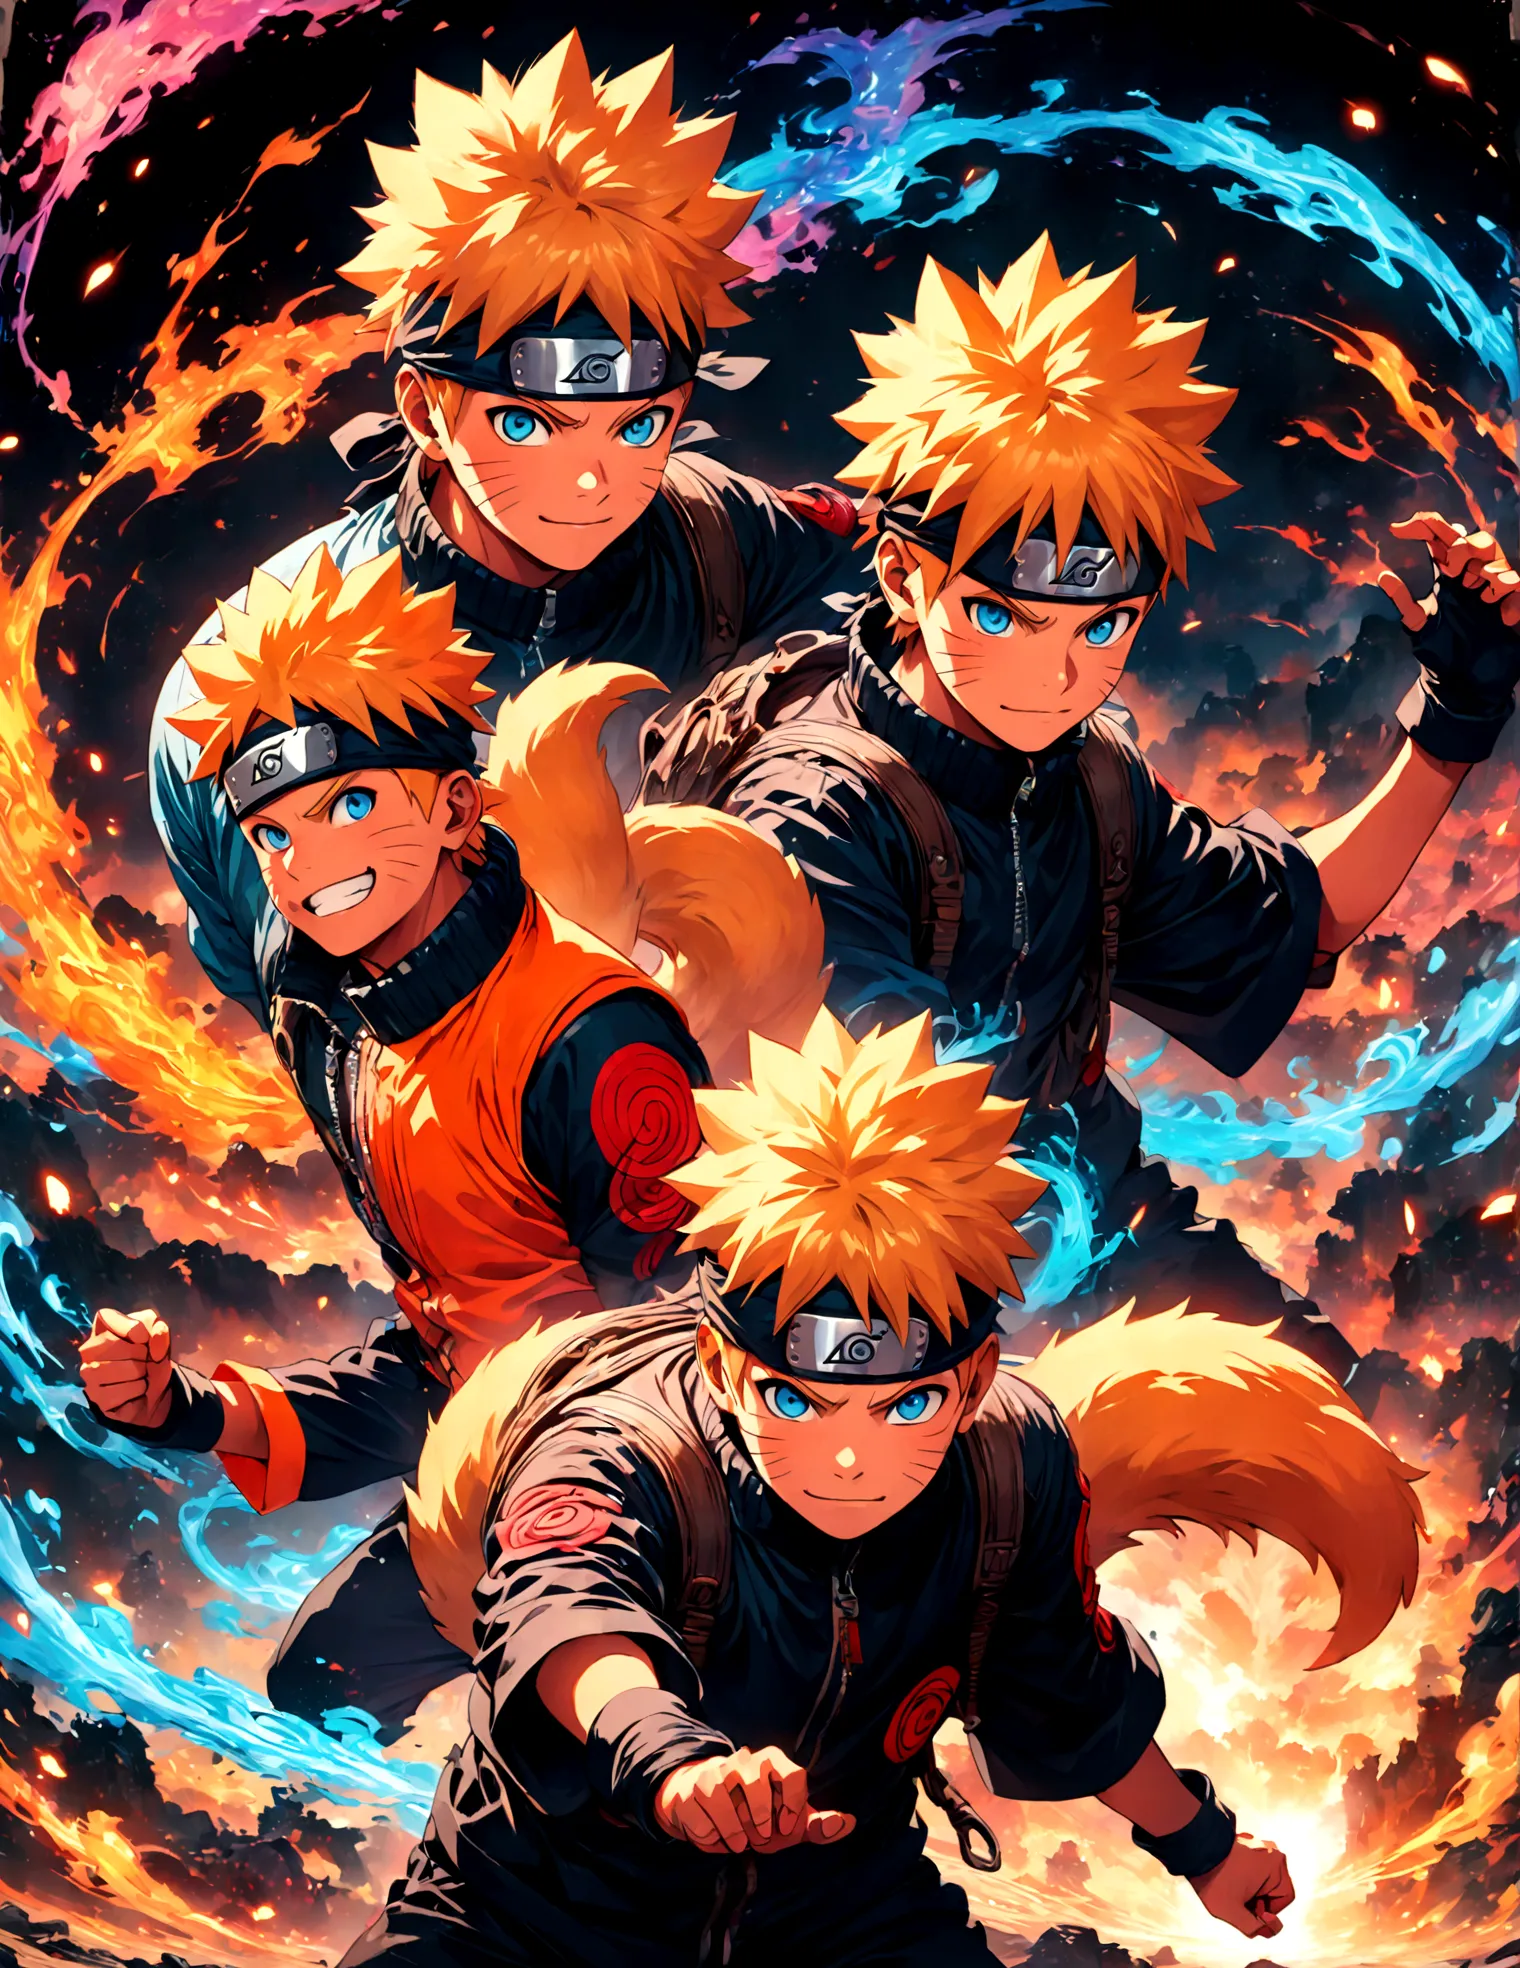 (1 teenager,uzumaki naruto),comics『Naruto』character,Focus on boys,Scroll to expand,Use of magic,Fighting Style,Sarcastic smile,M...